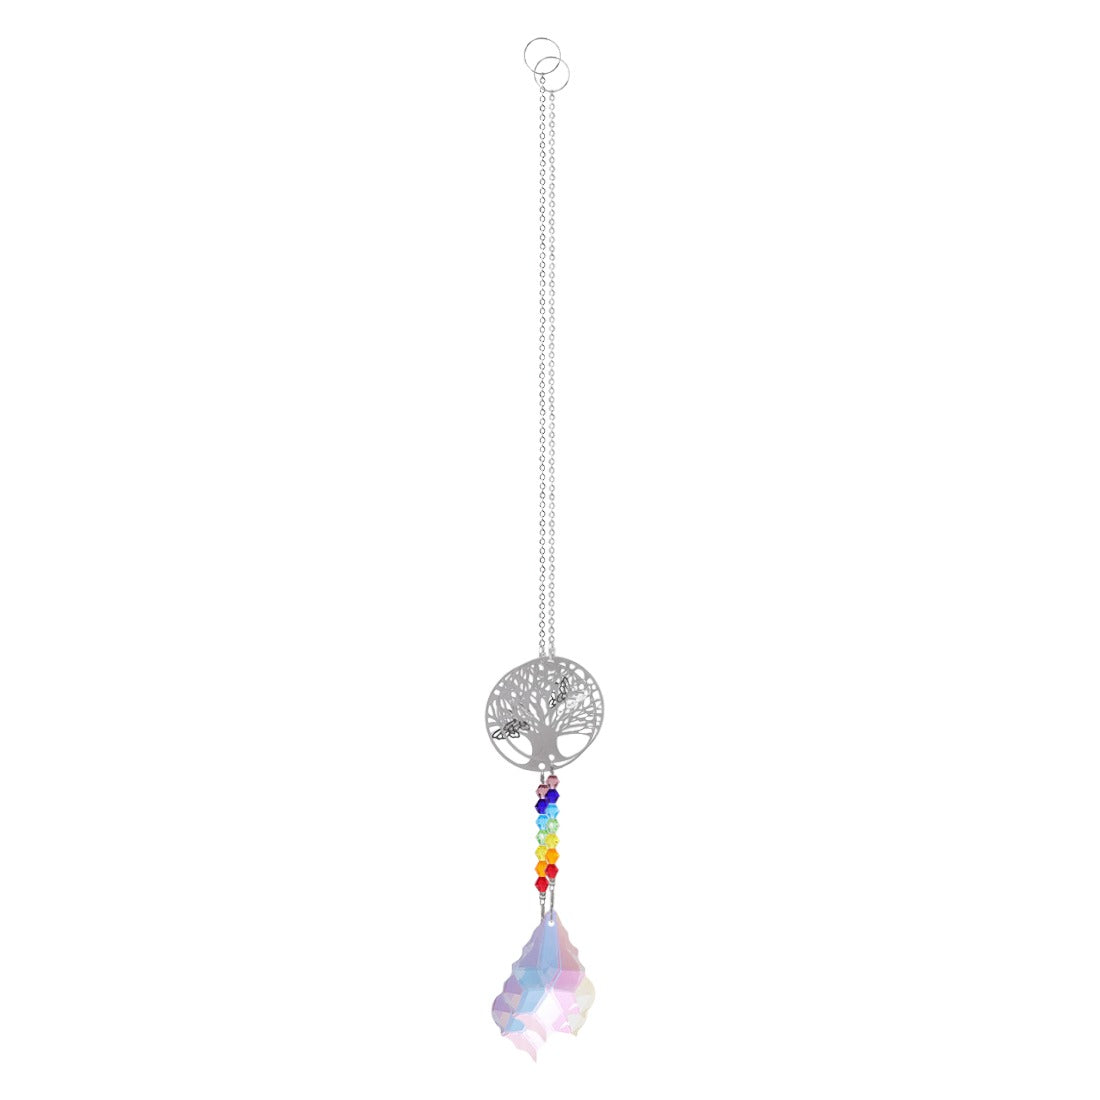 K9 Crystal Hanger Suncatcher Chakra w Tree and Butterflies Style 4 - 13 inch - NEW523